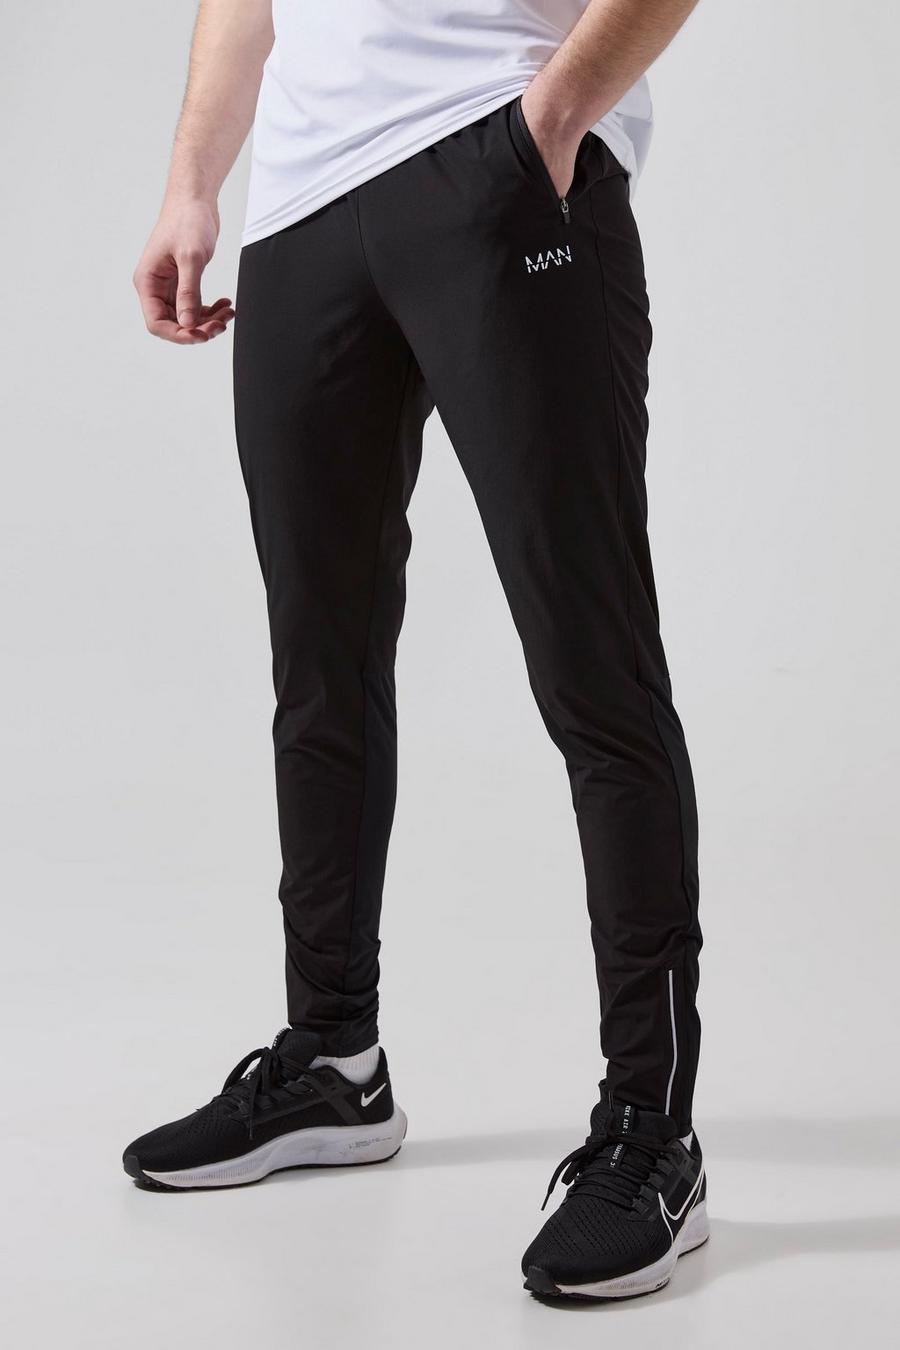 Pack de 2 pantalones de chándal Tall MAN Active deportivos ligeros, Black image number 1